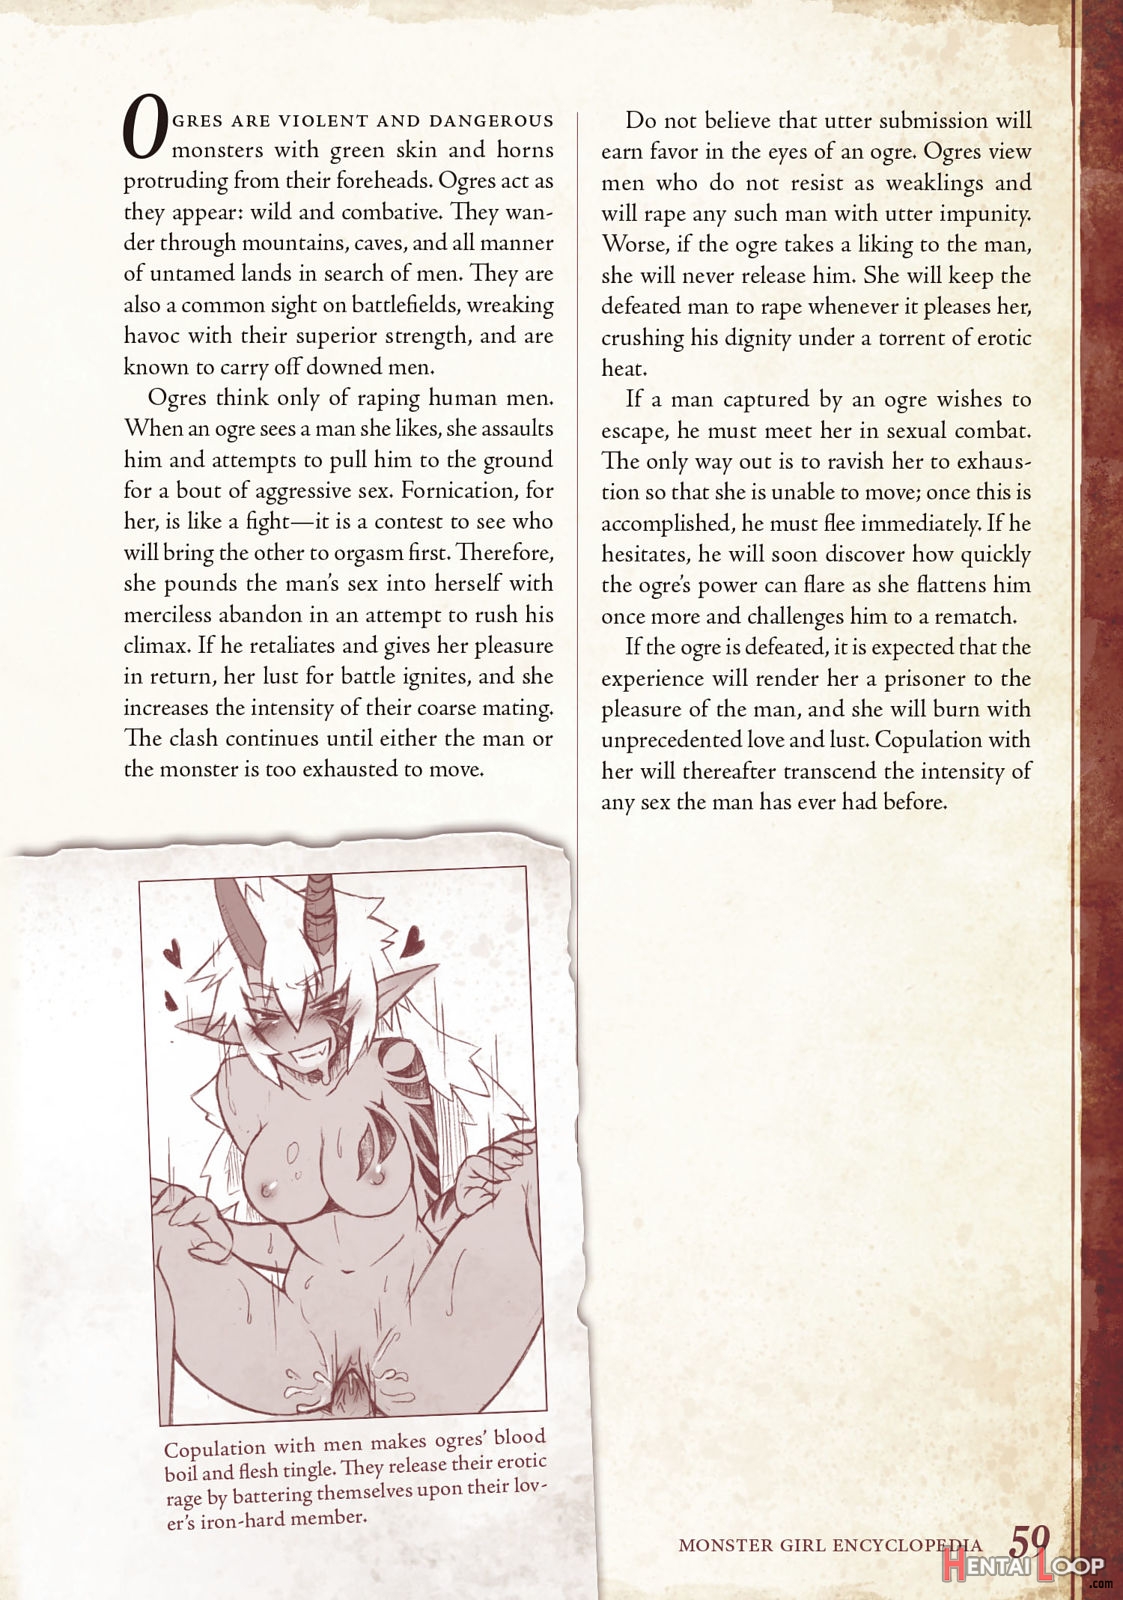 Monster Girl Encyclopedia Vol. 1 page 60